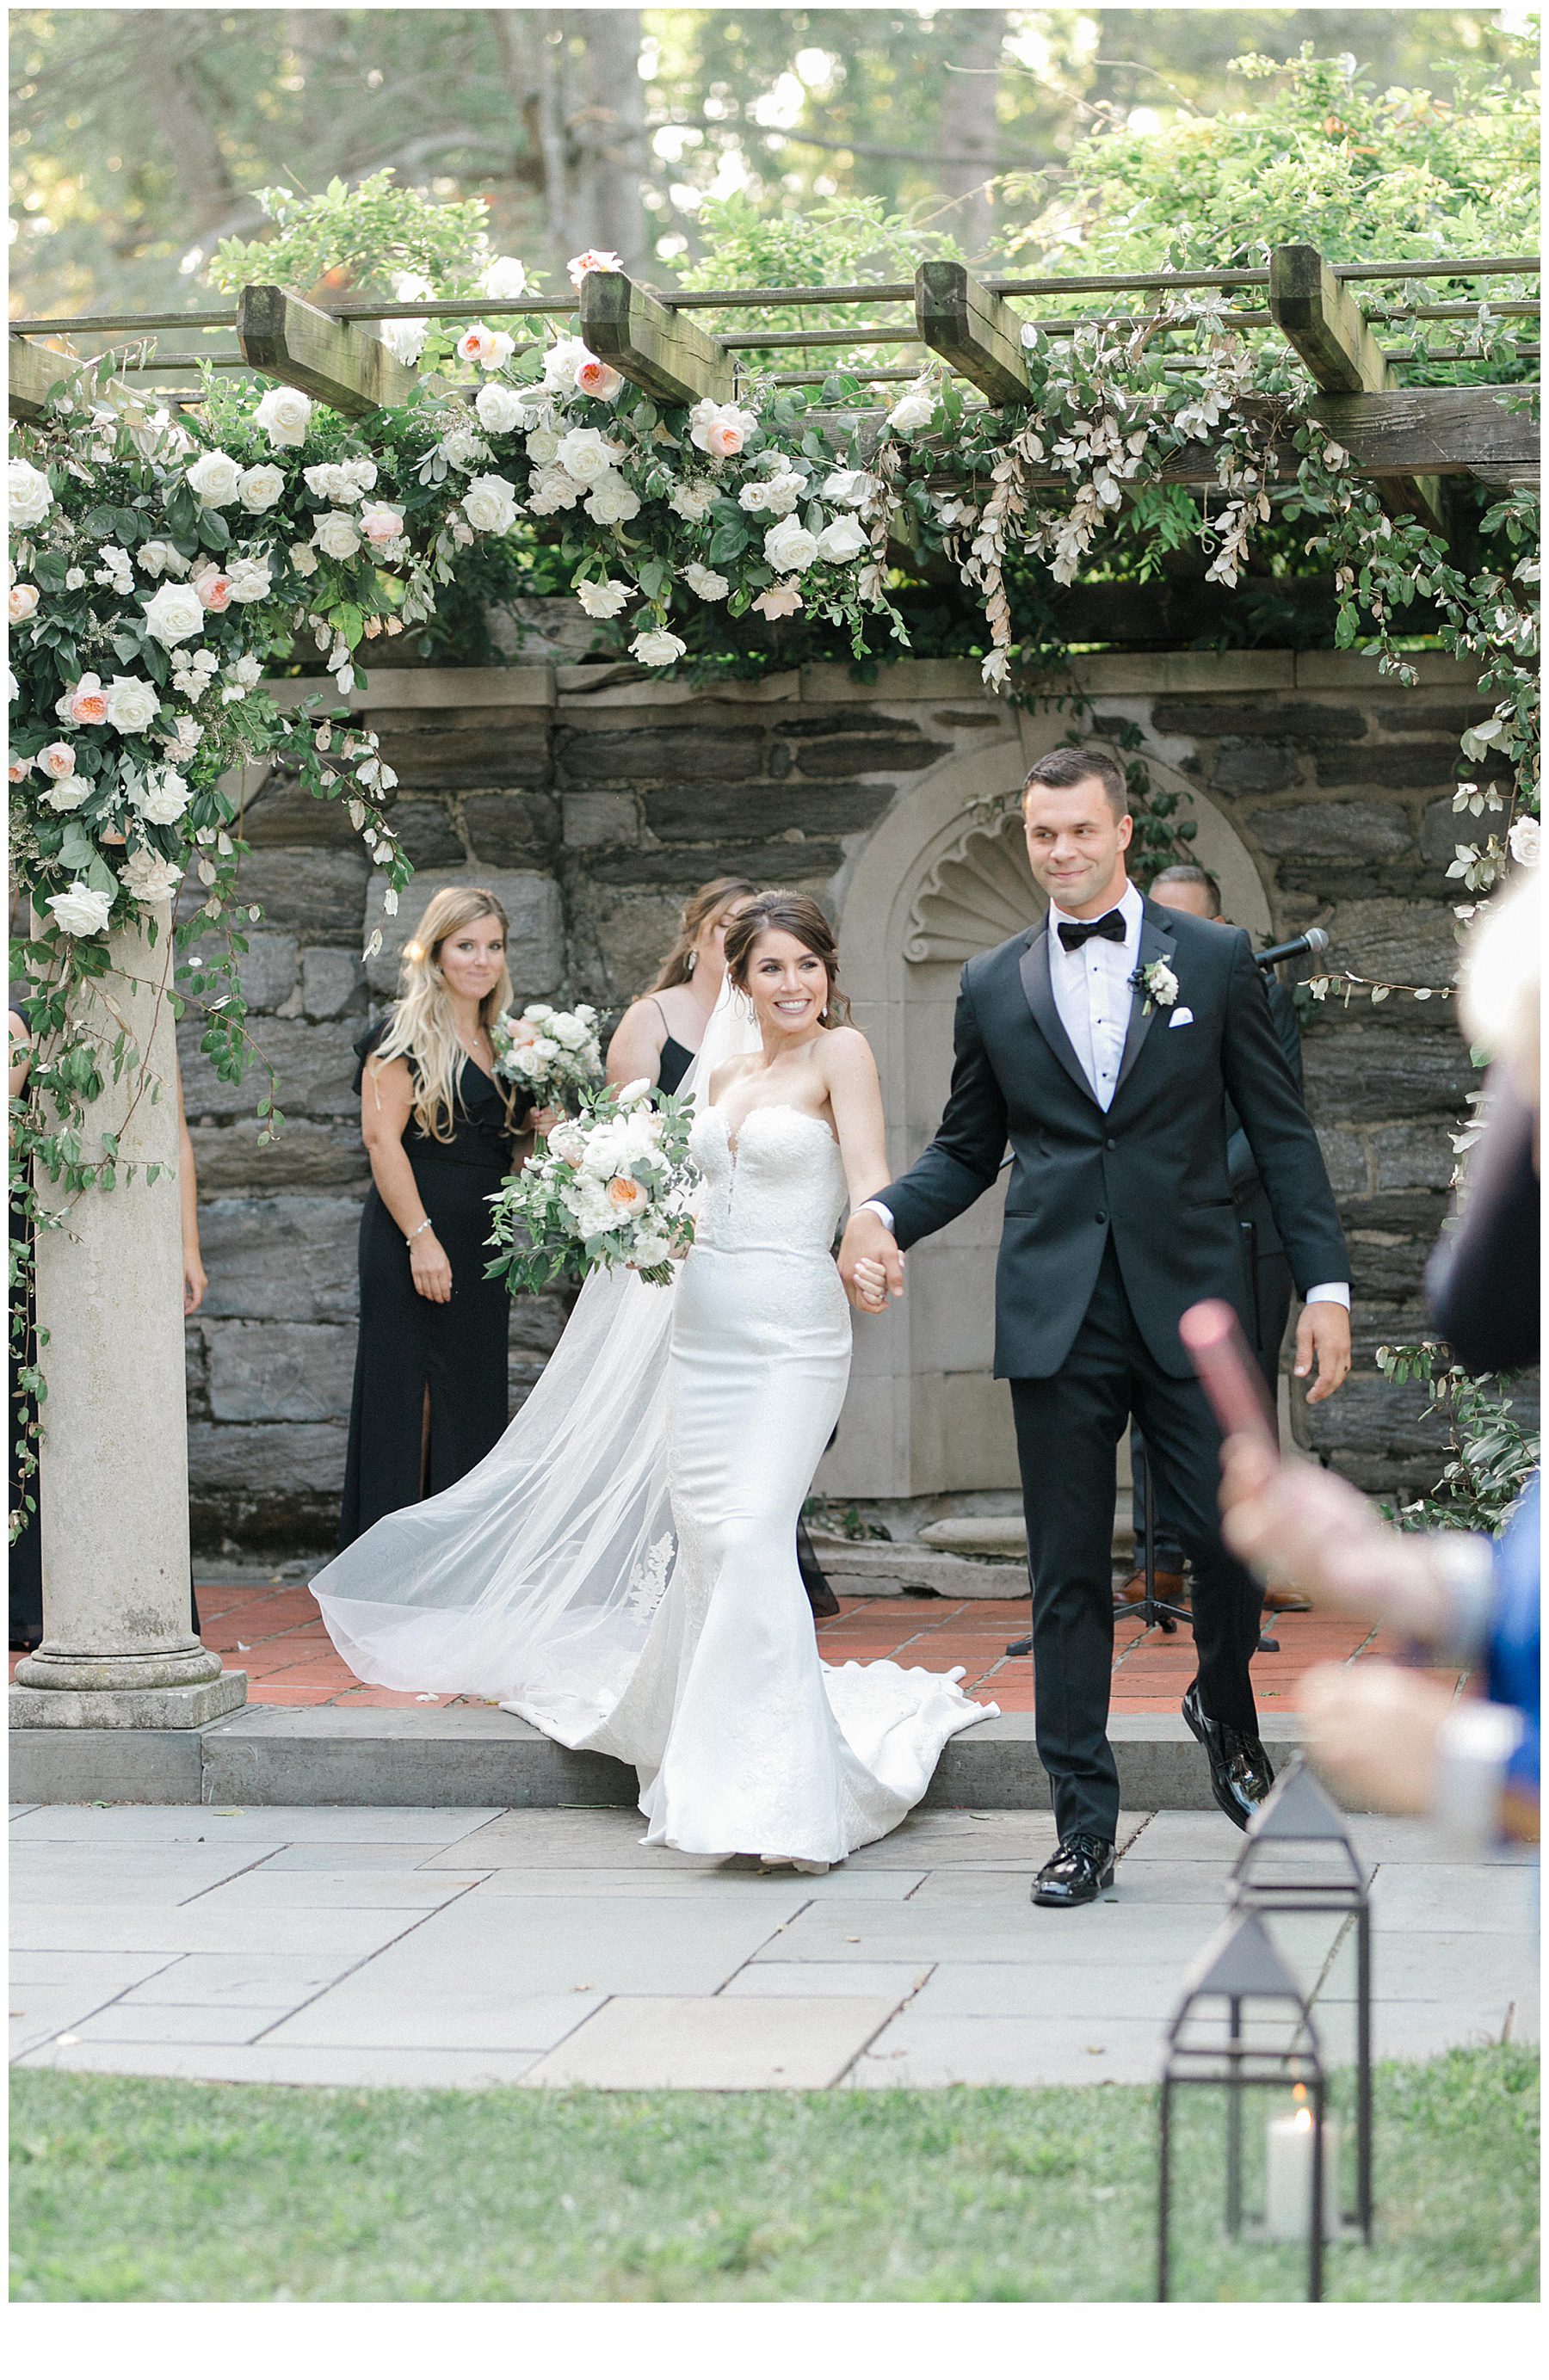 newlyweds exit wedding ceremony at Curtis Arboretum in Wyncote, Pennsylvania